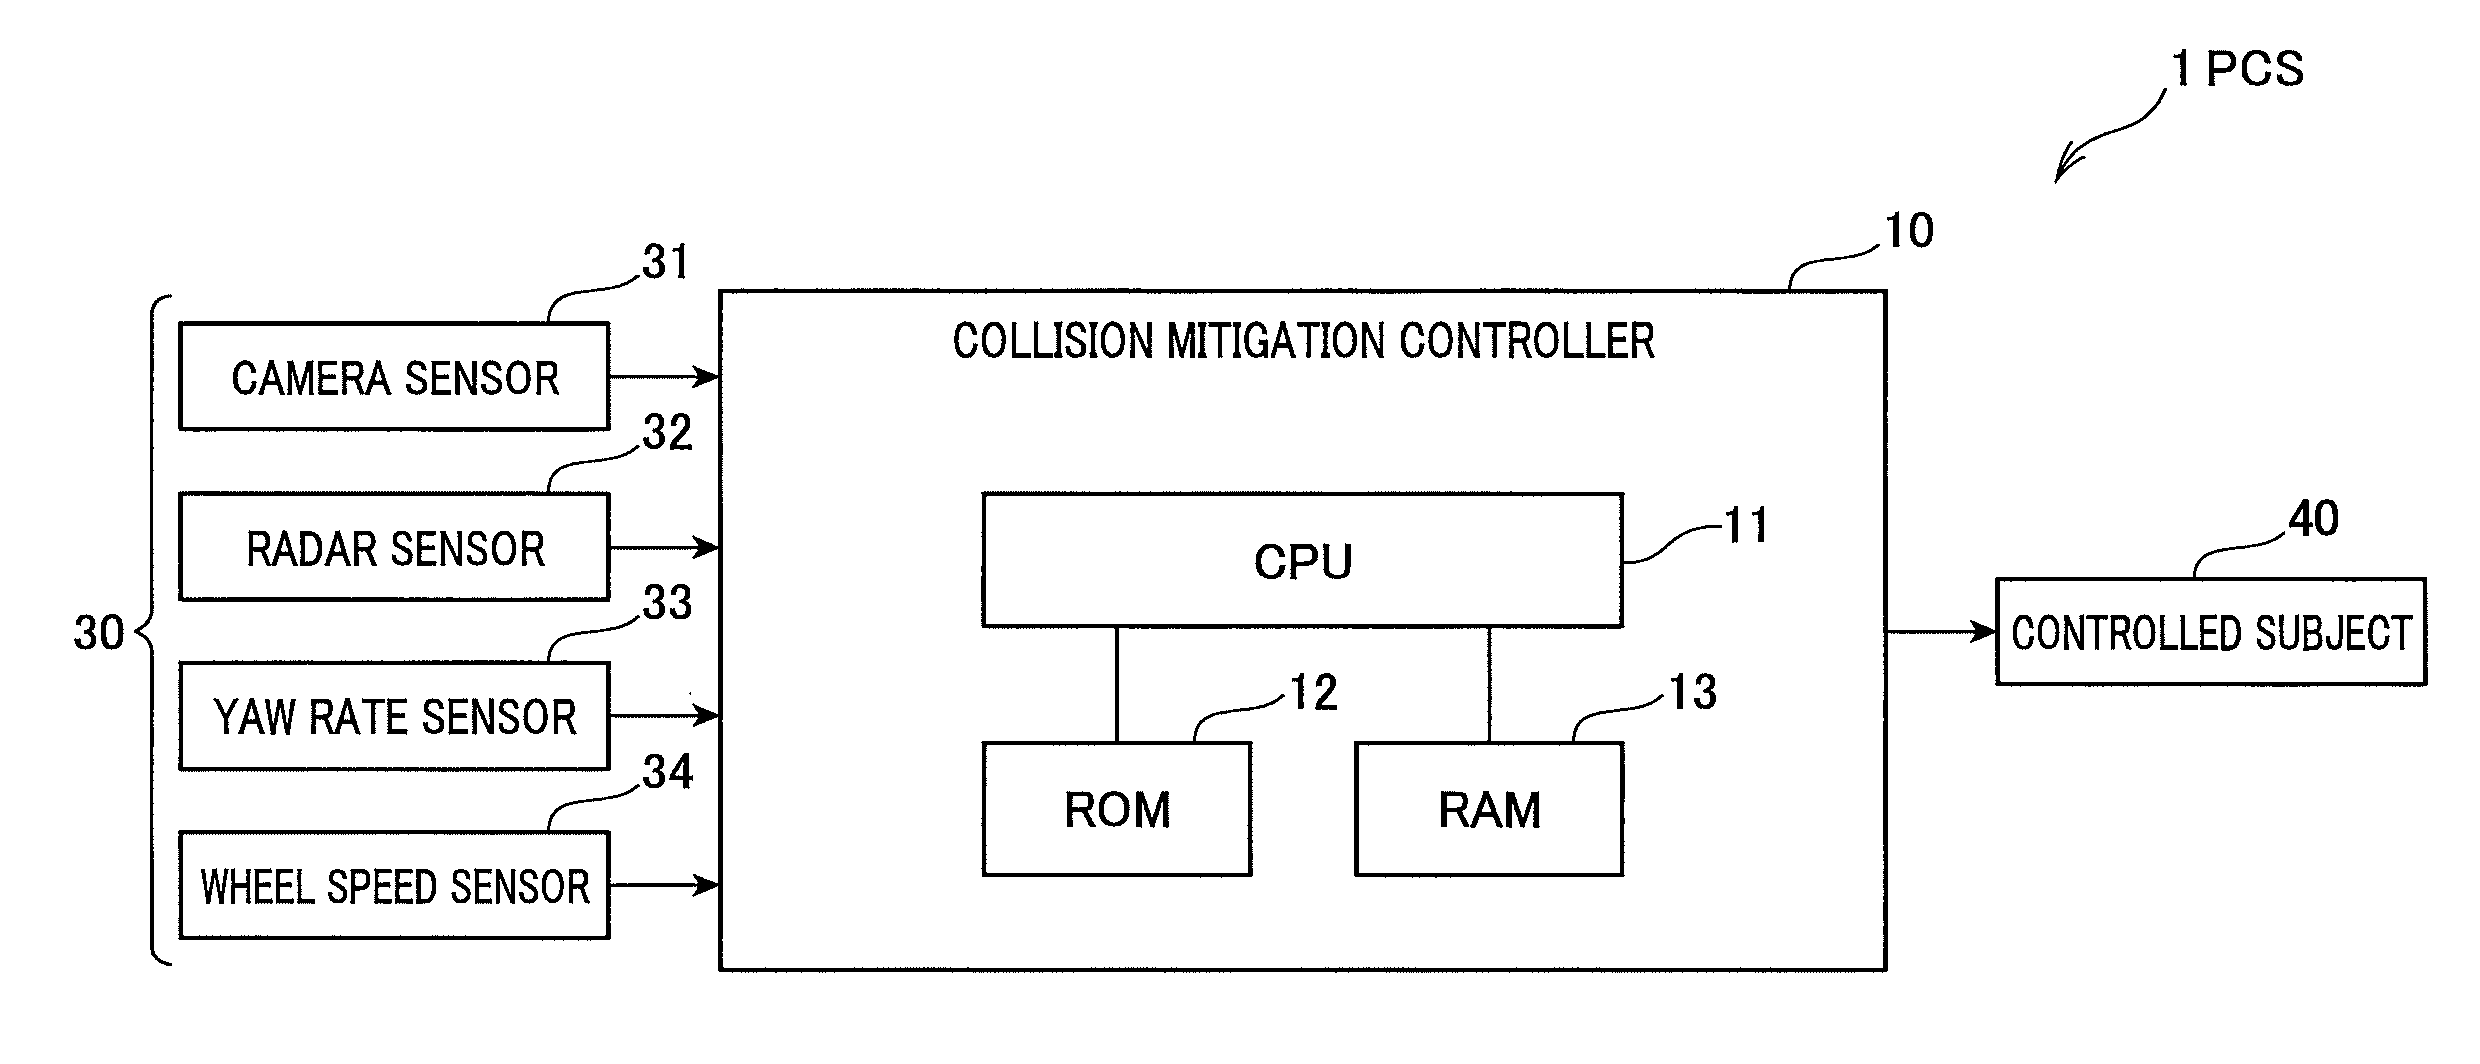 Collision determination device and collision mitigation device